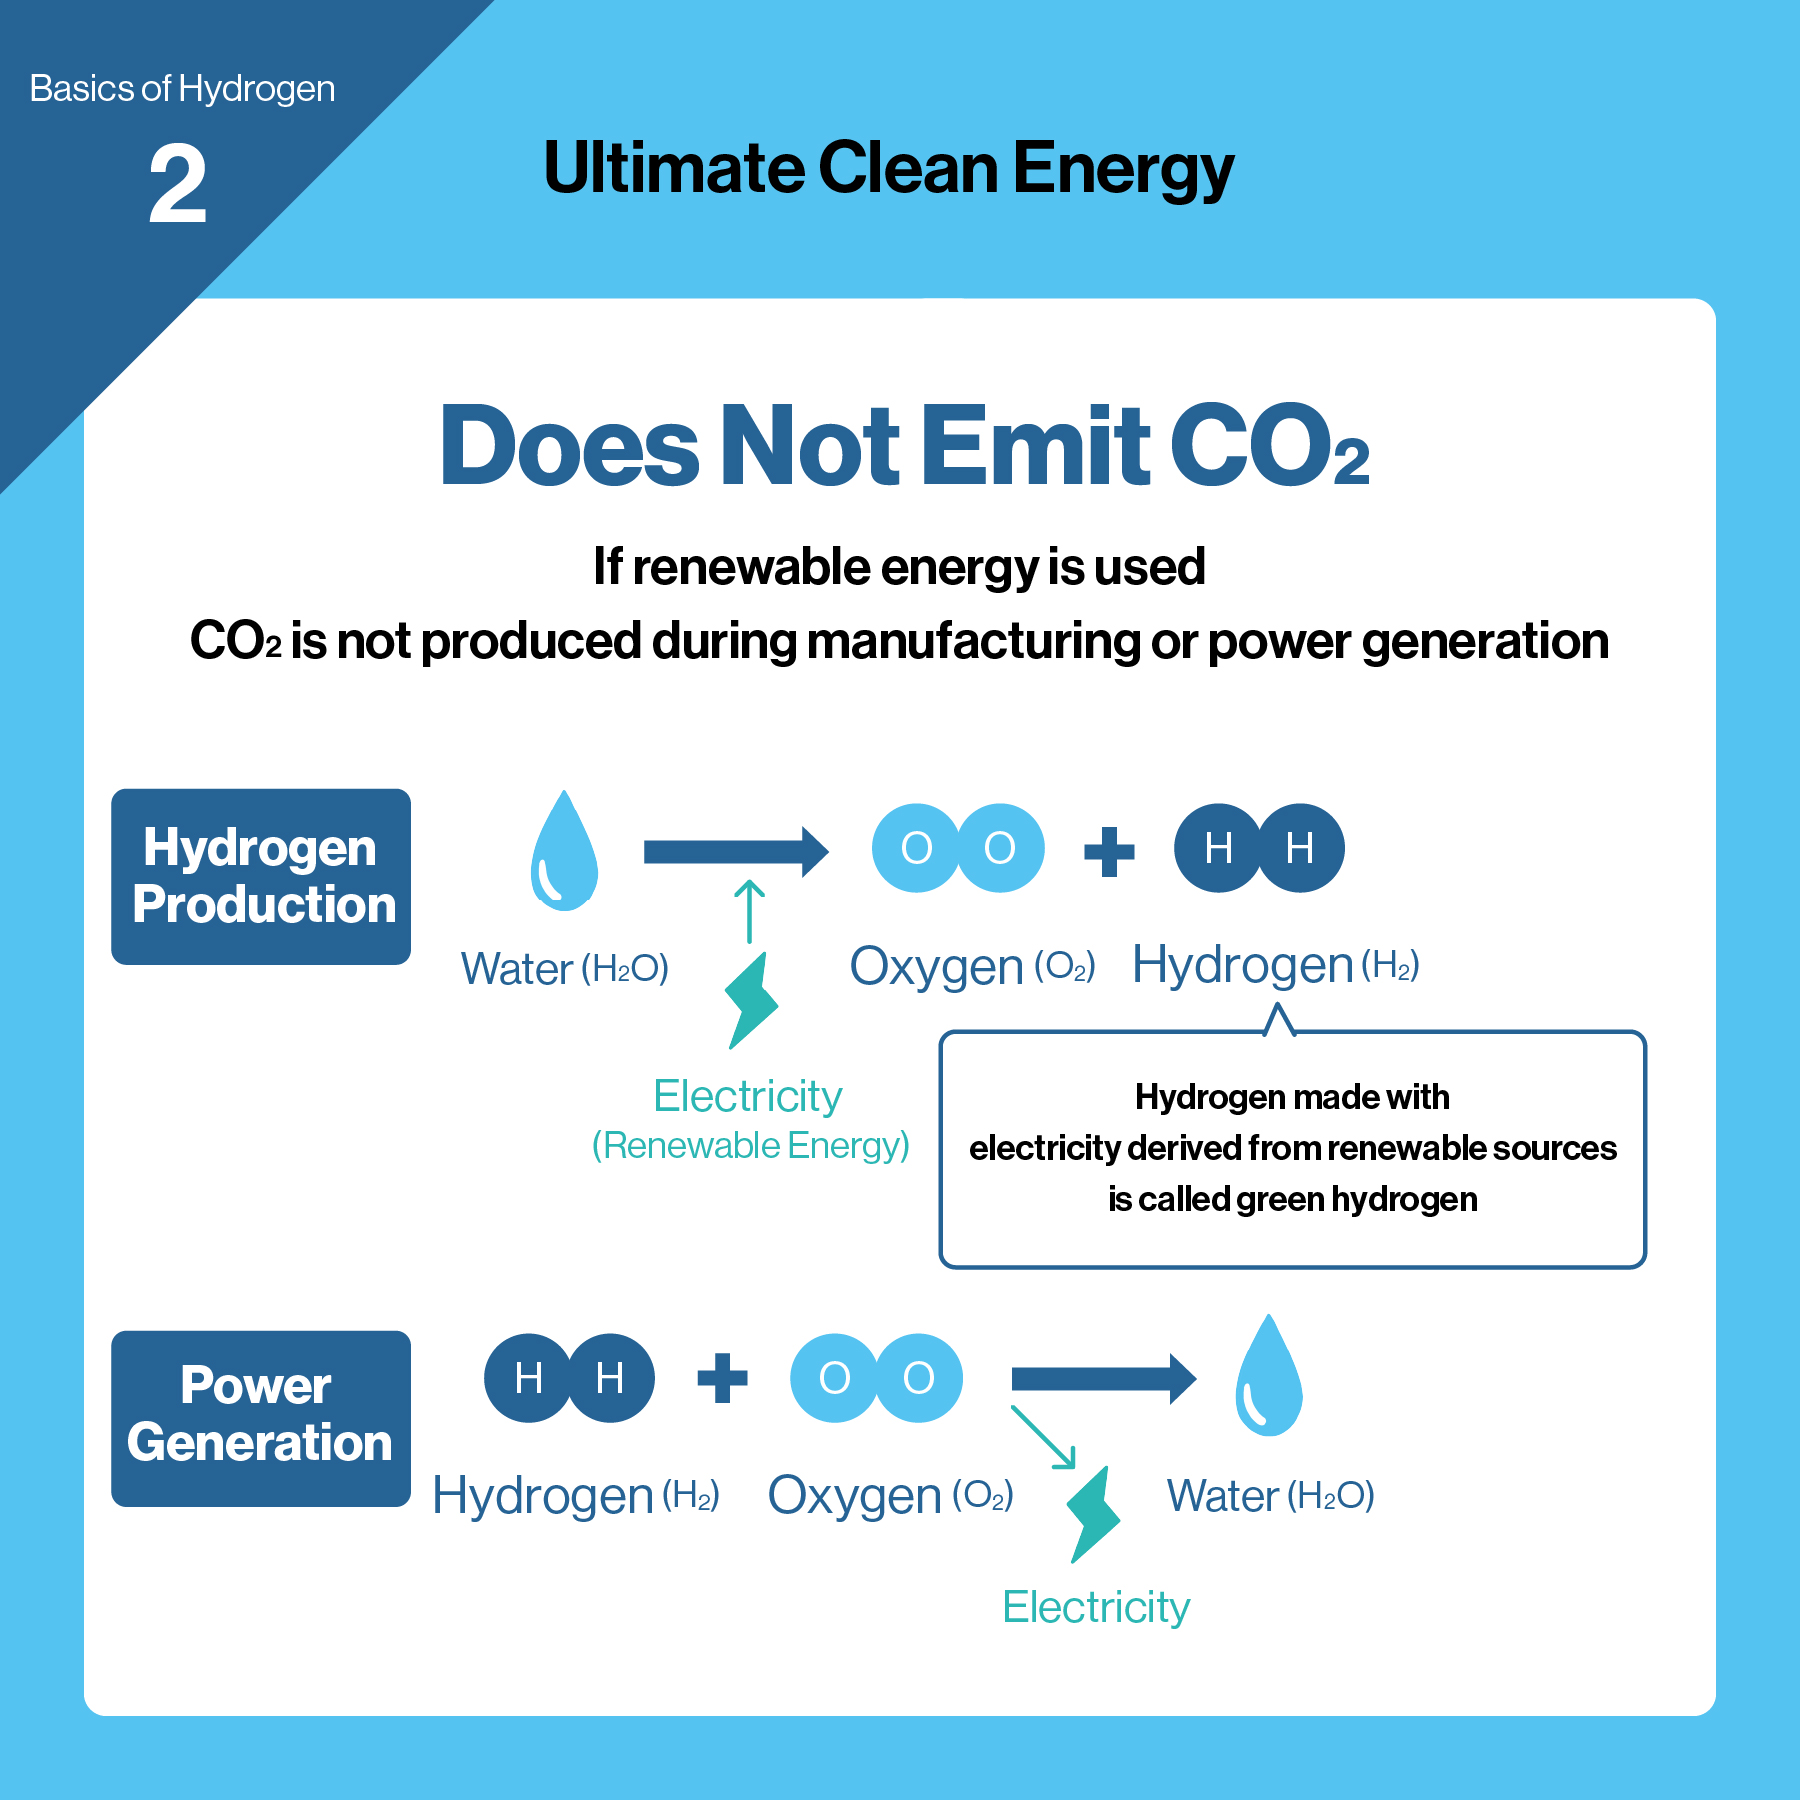 Basics of Hydrogen (2) Hydrogen does not emit CO2